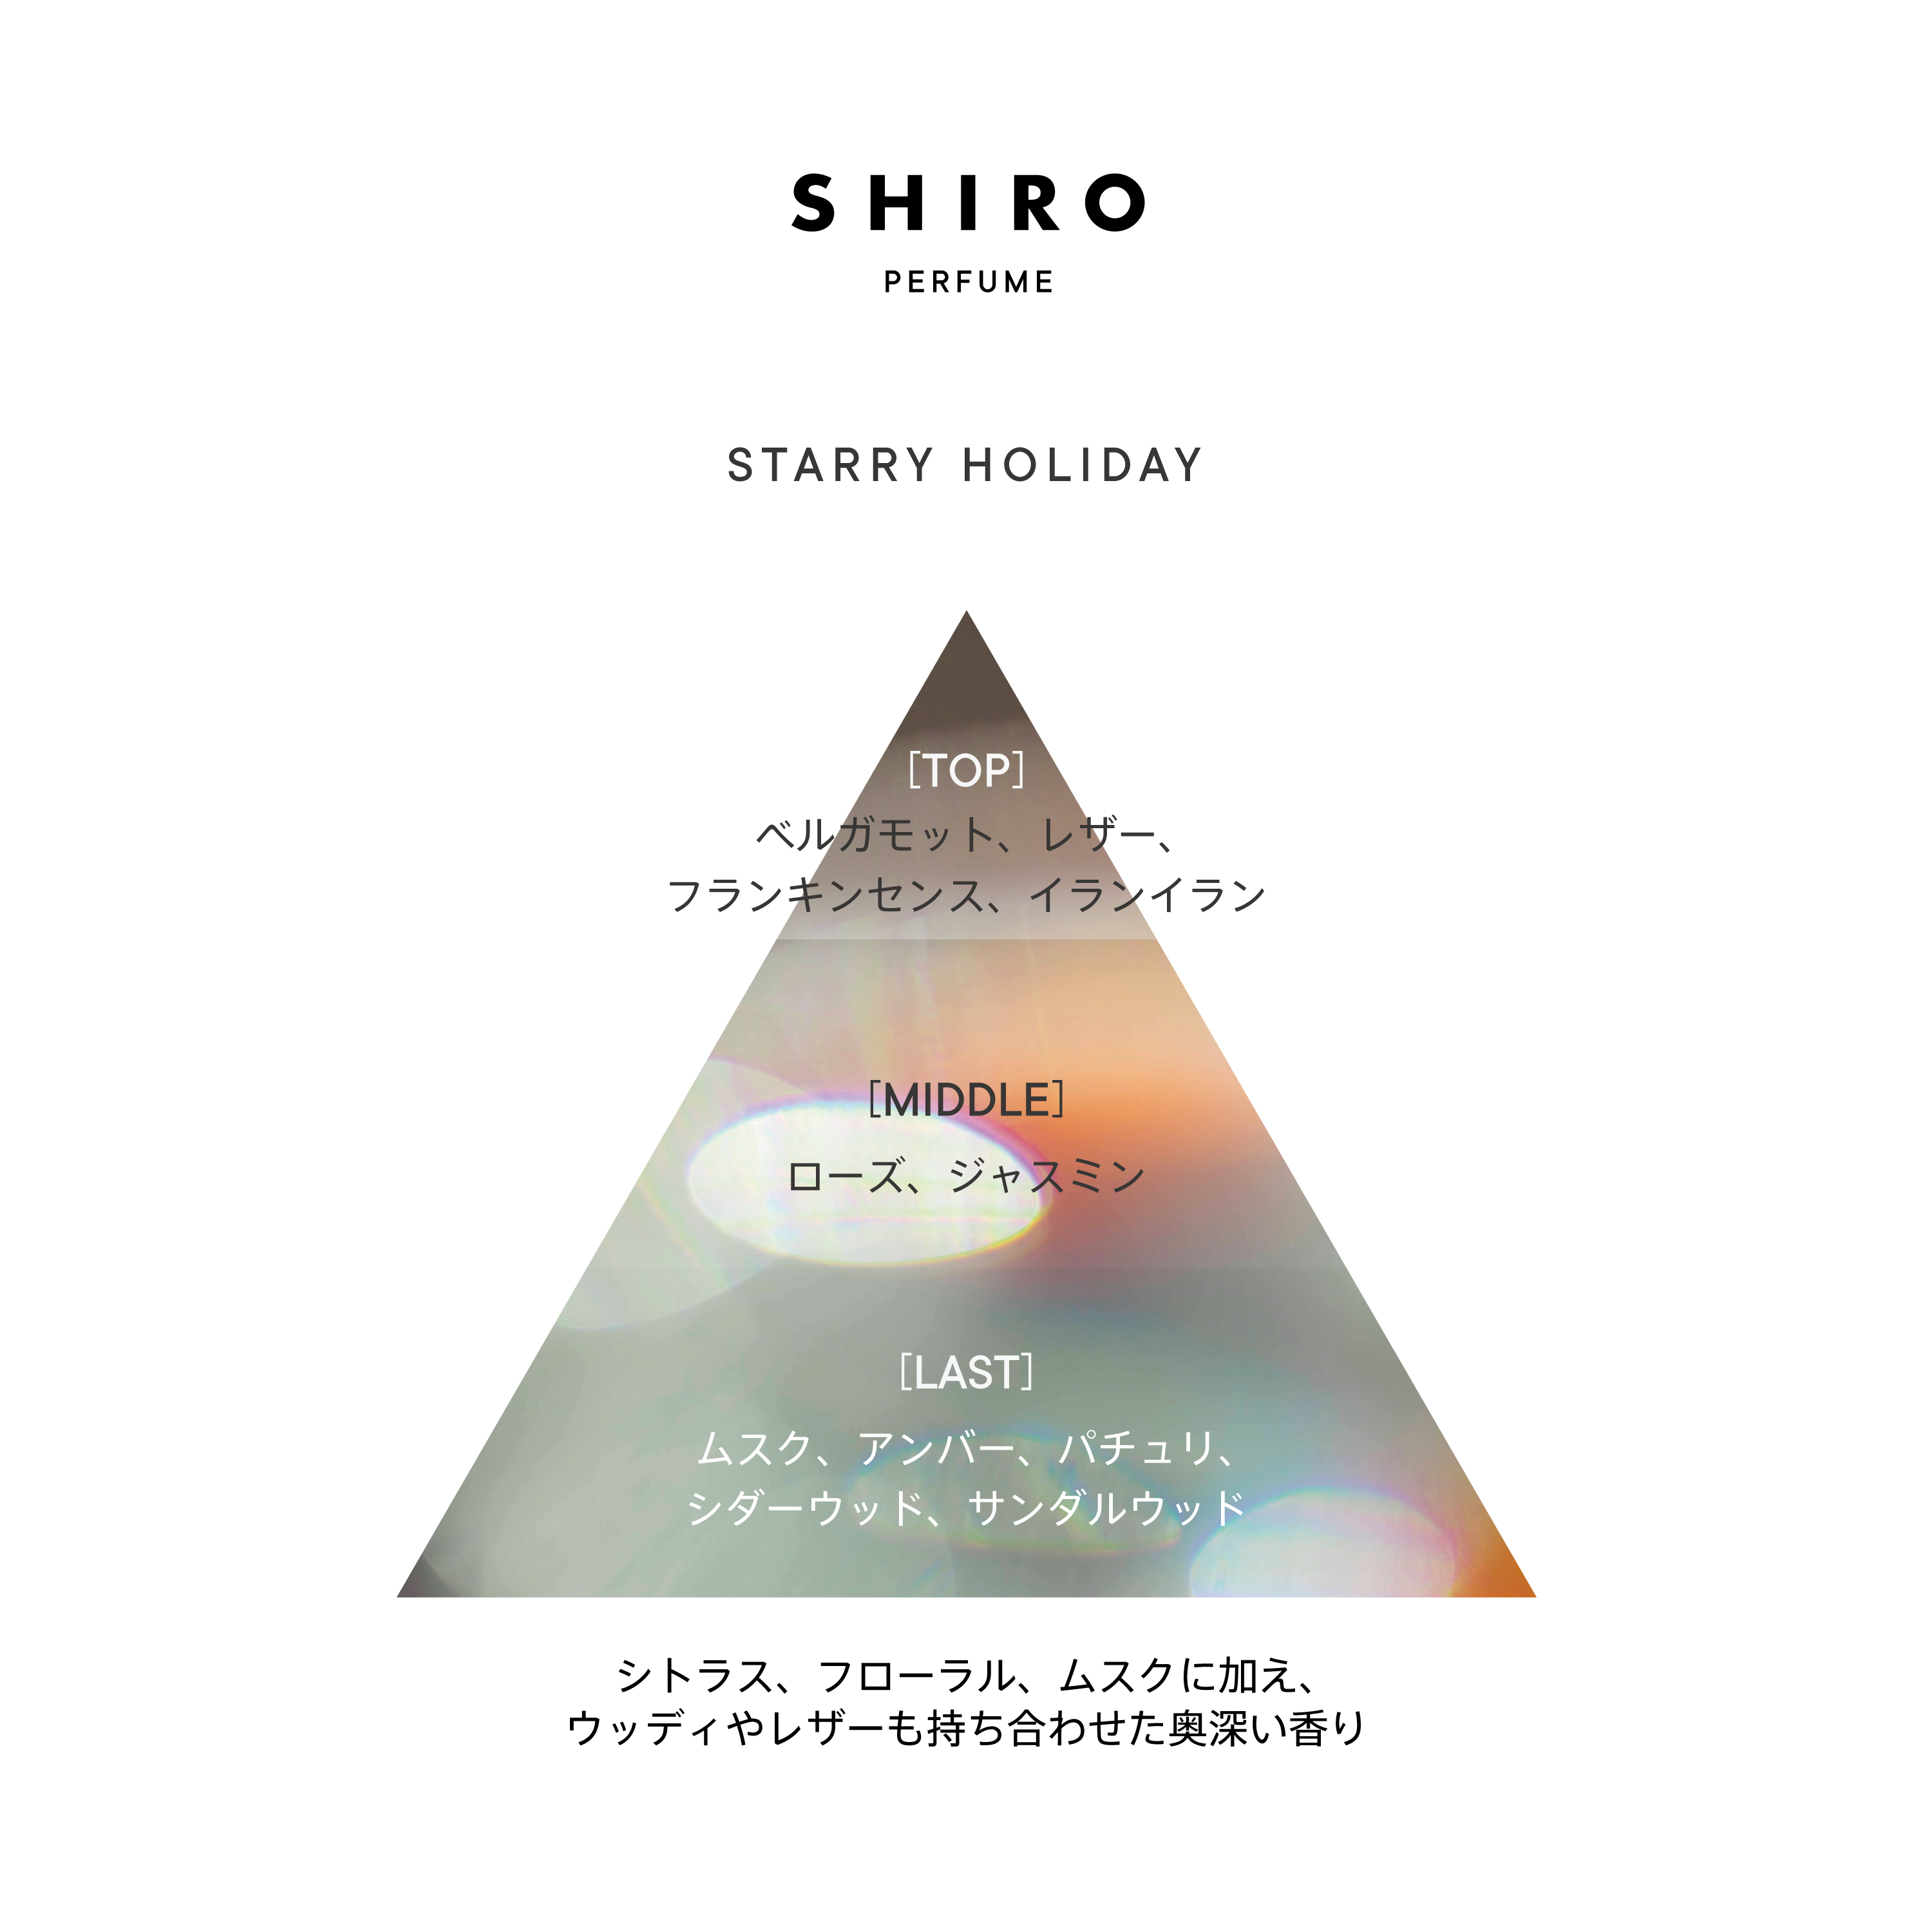 SHIRO PERFUME STARRY HOLIDAY | SHIROオフィシャルサイト